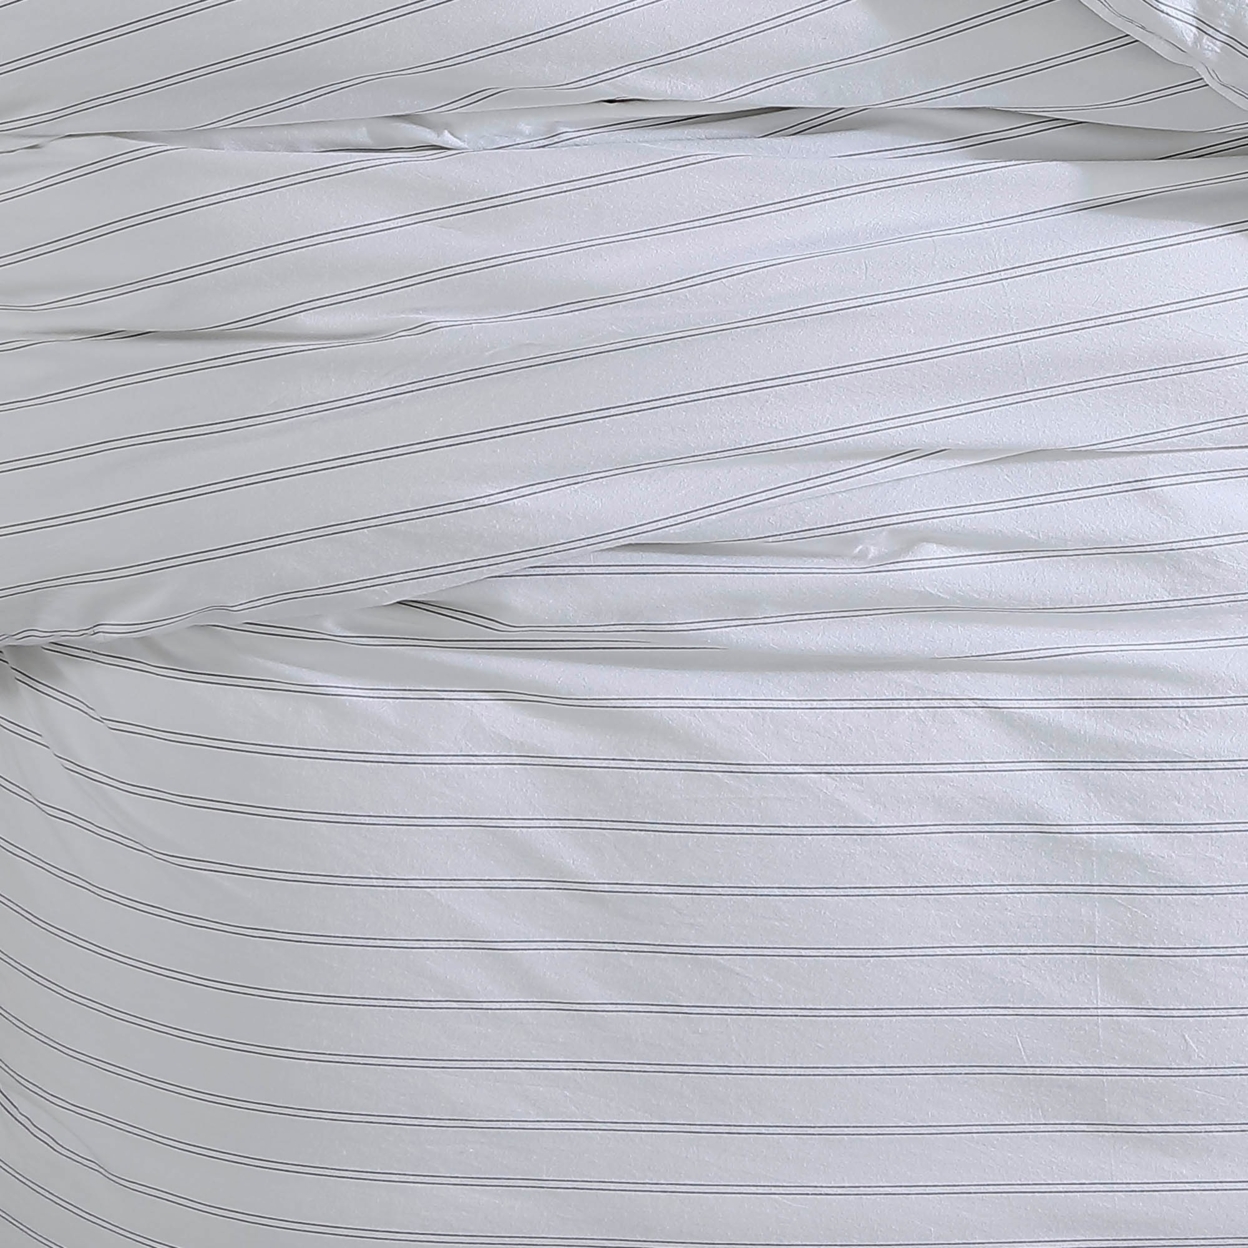 3 Piece Queen Comforter Set With Pinstripe Pattern, White And Black- Saltoro Sherpi